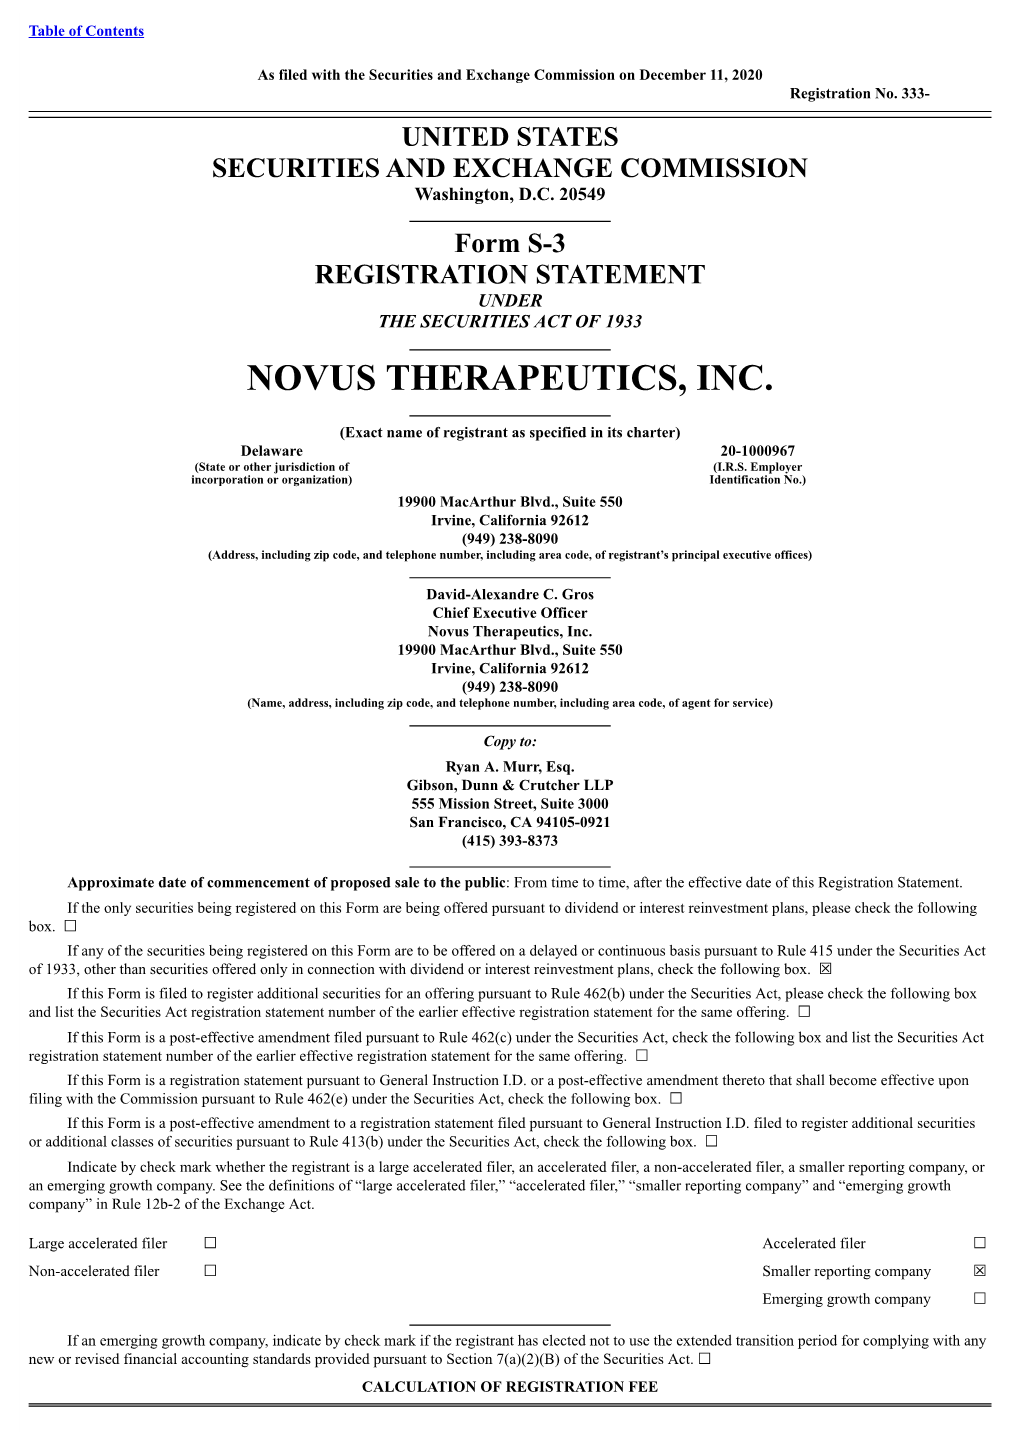 Novus Therapeutics, Inc